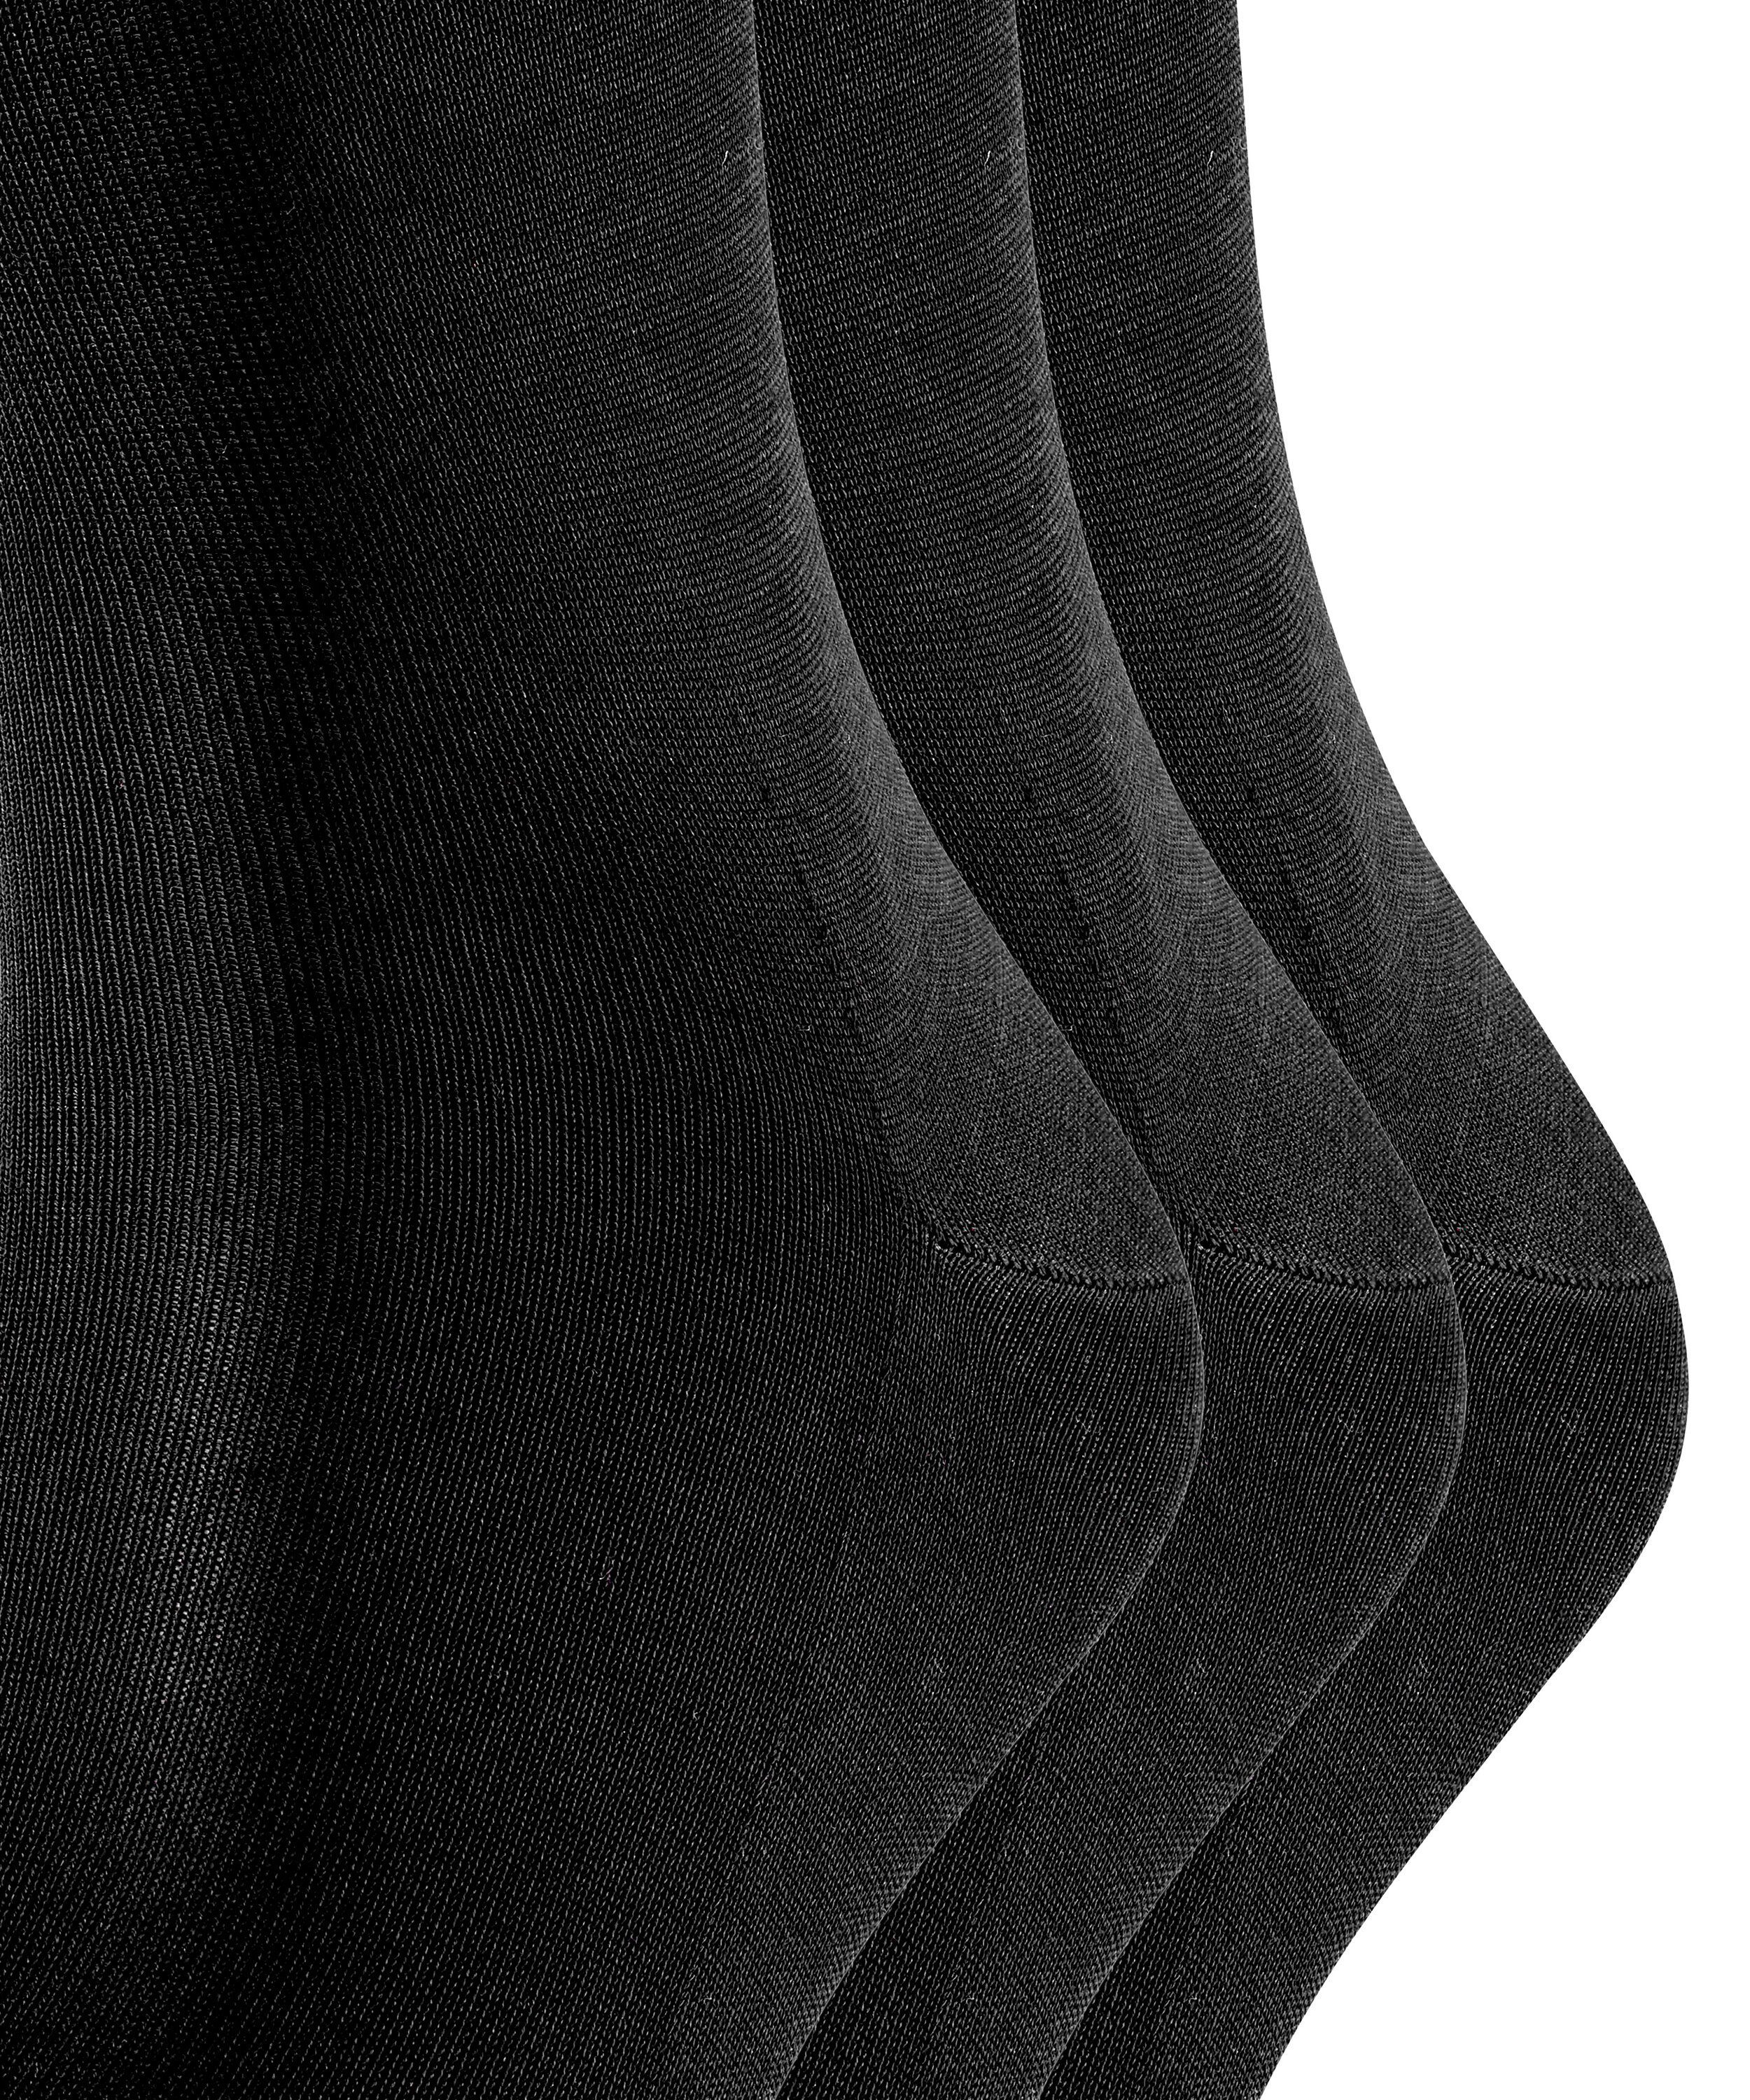 3-Pack (3-Paar) (3000) FALKE Socken black Tiago